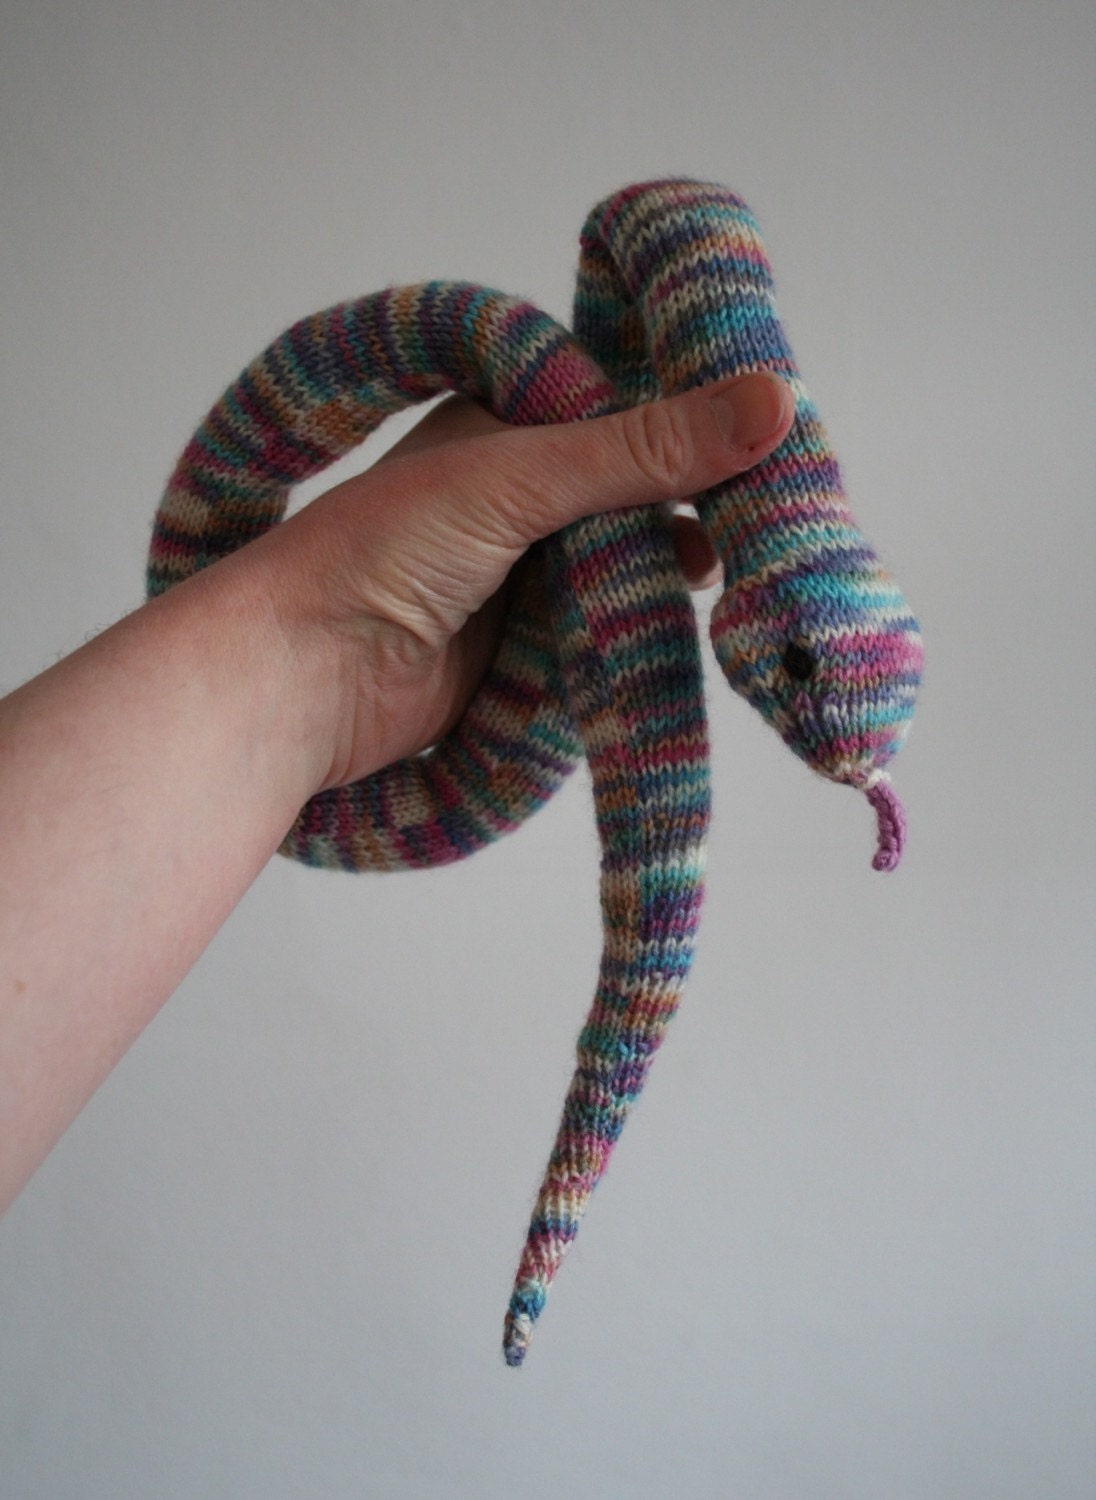 Bead Crochet Snake Kit, Jewelry Making Kits for Adults, Snake